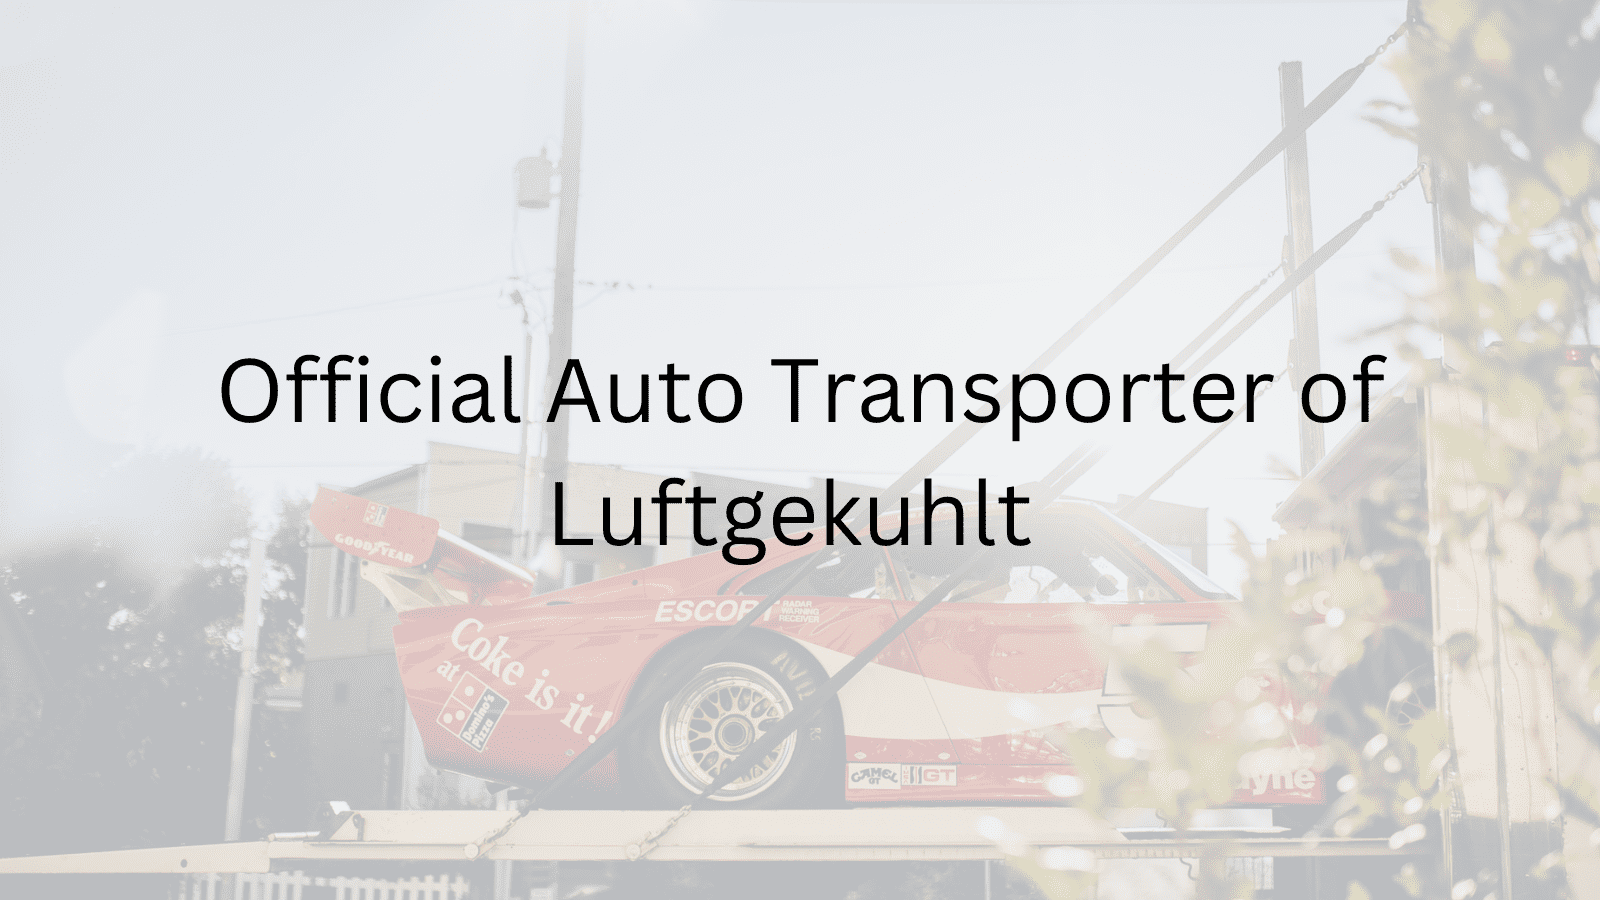 Official Auto Transporter of Luftgekuhlt